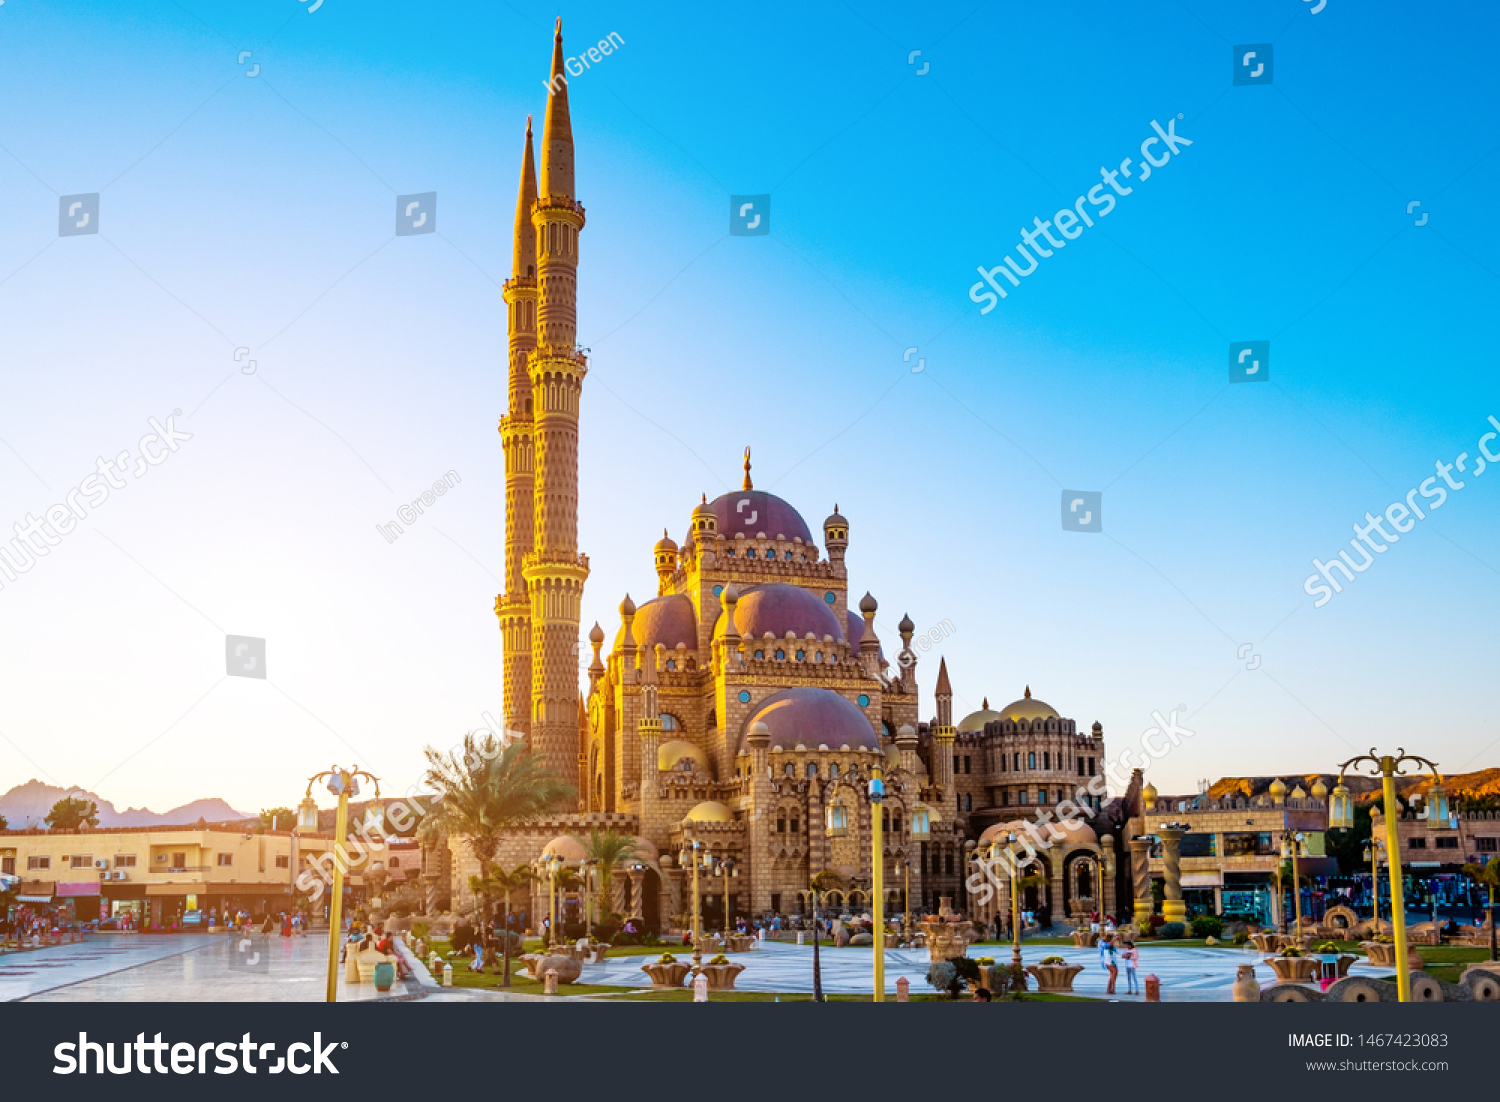 Sharm el sheikh Images, Stock Photos & Vectors | Shutterstock